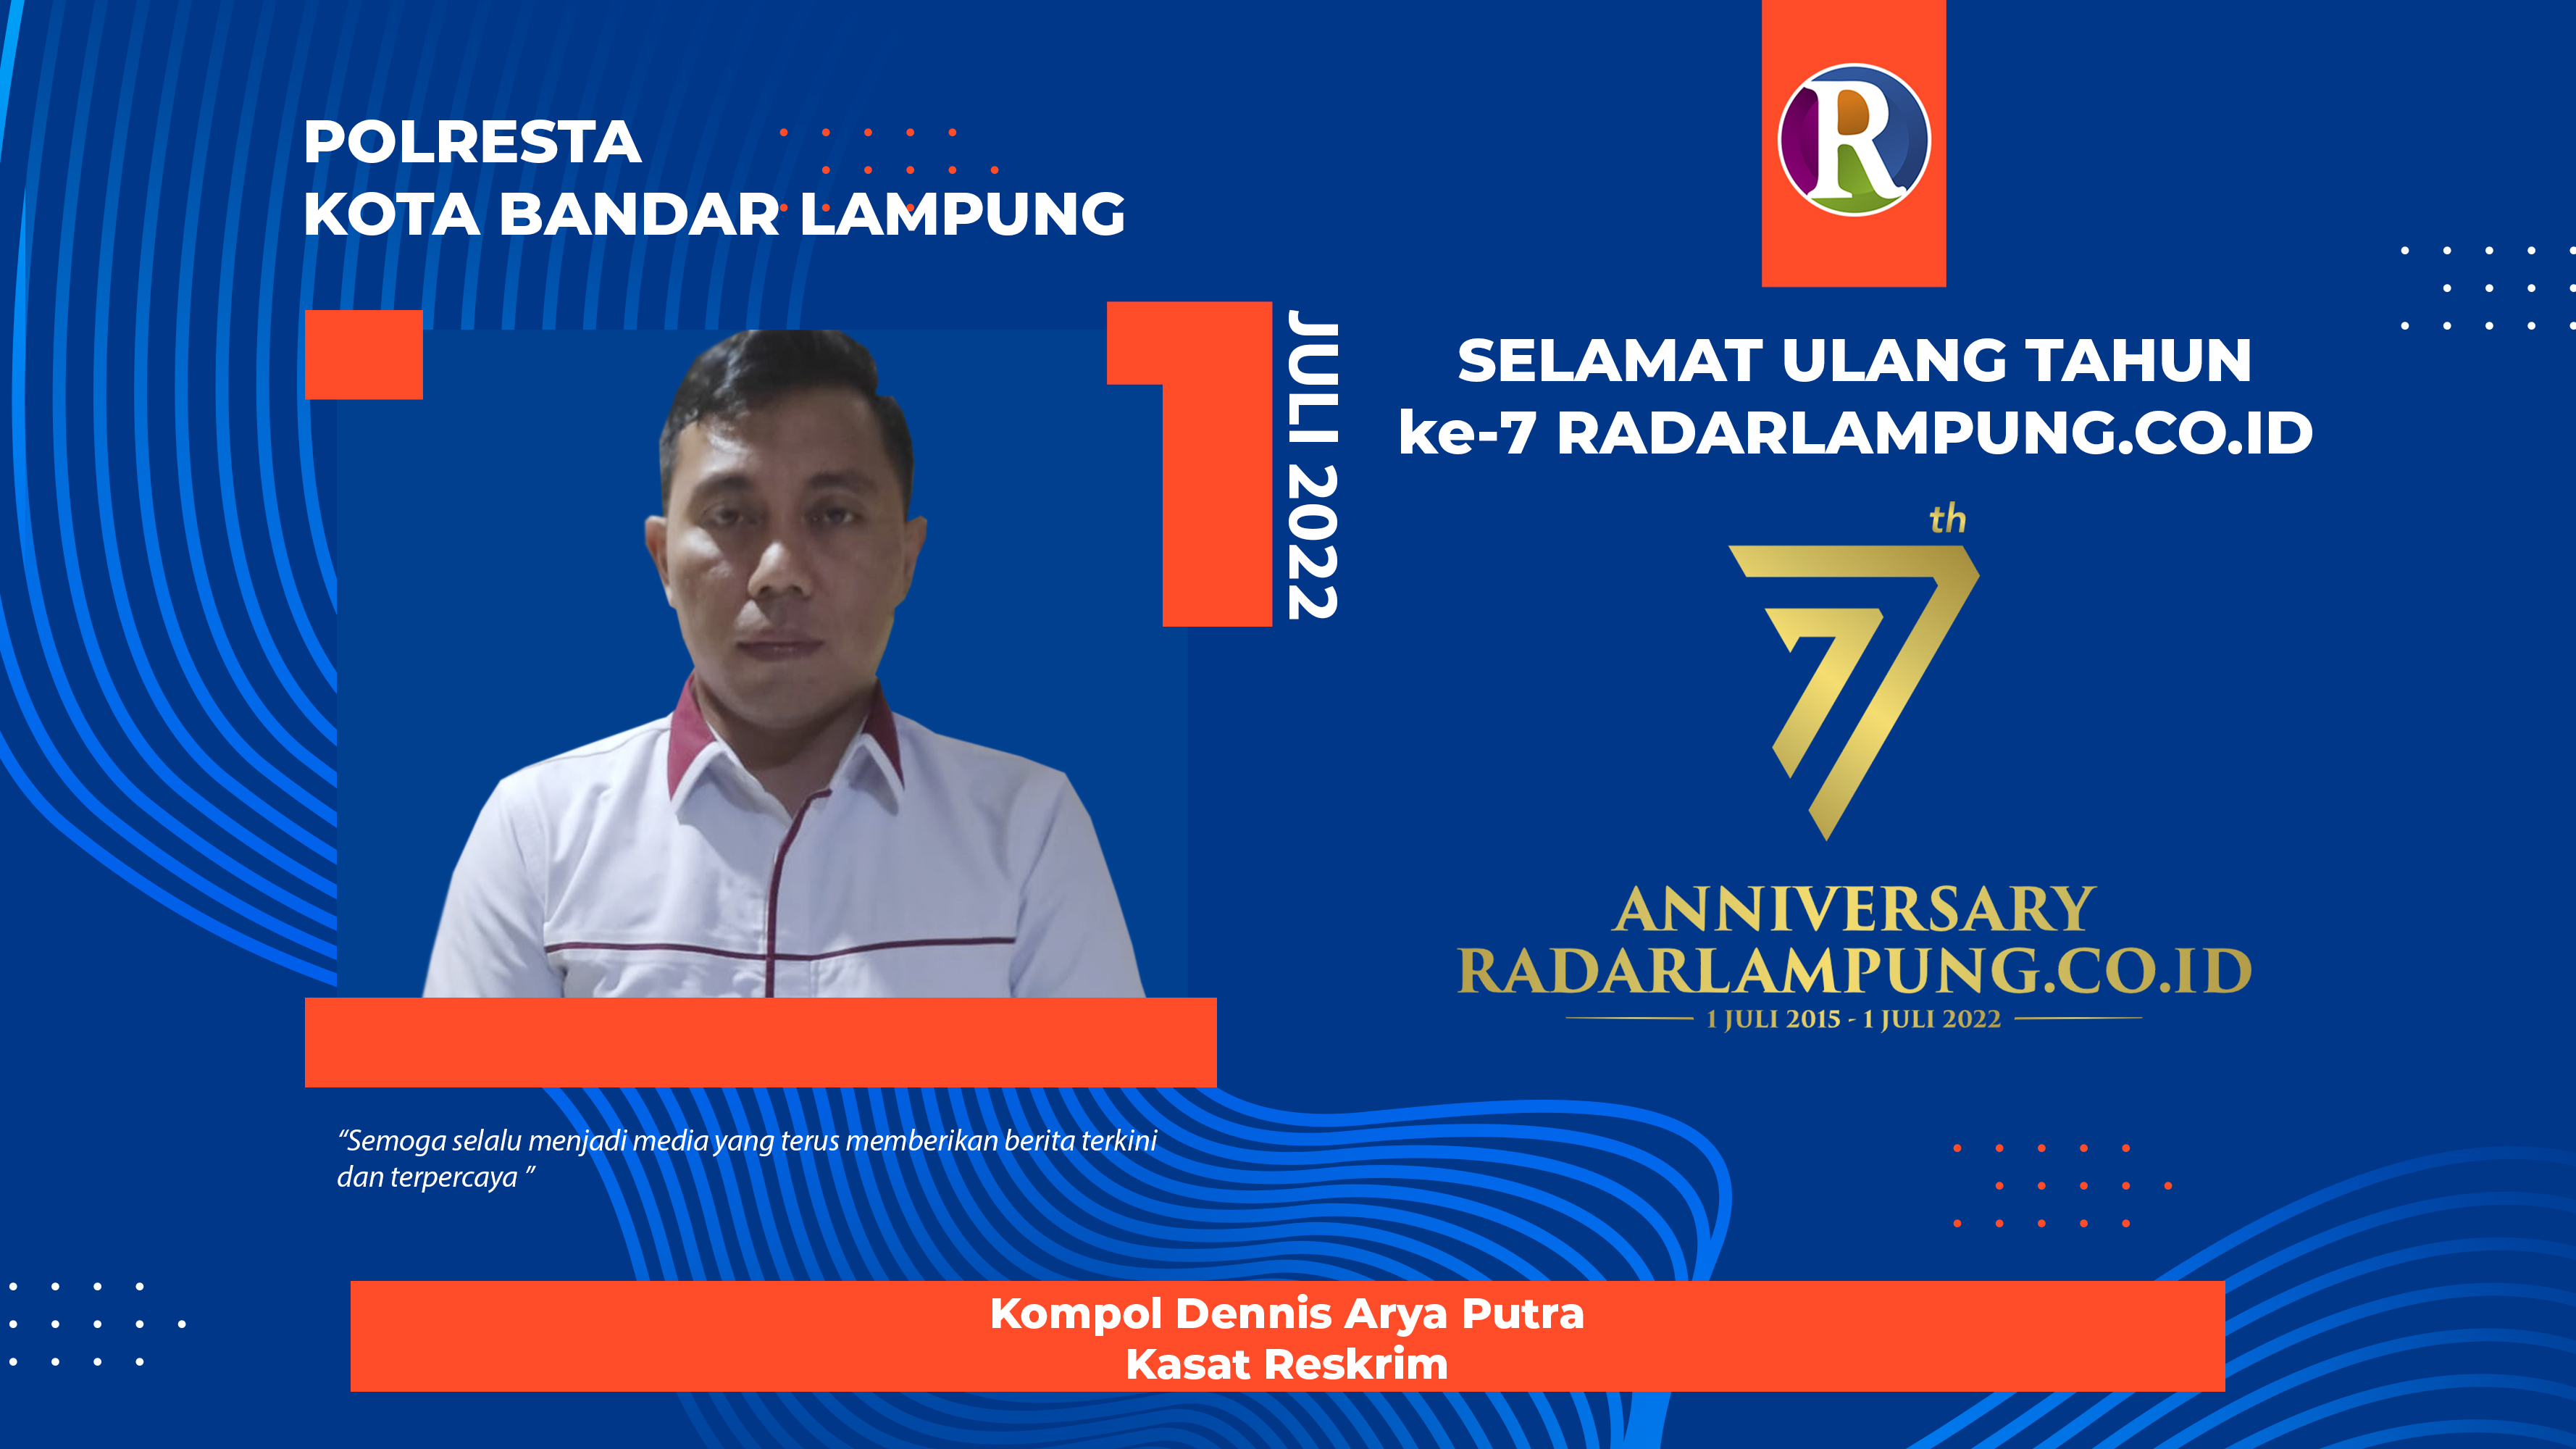 Polresta Kota Bandar Lampung Mengucapkan Selamat Ulang Tahun ke-7 Radarlampung.co.id